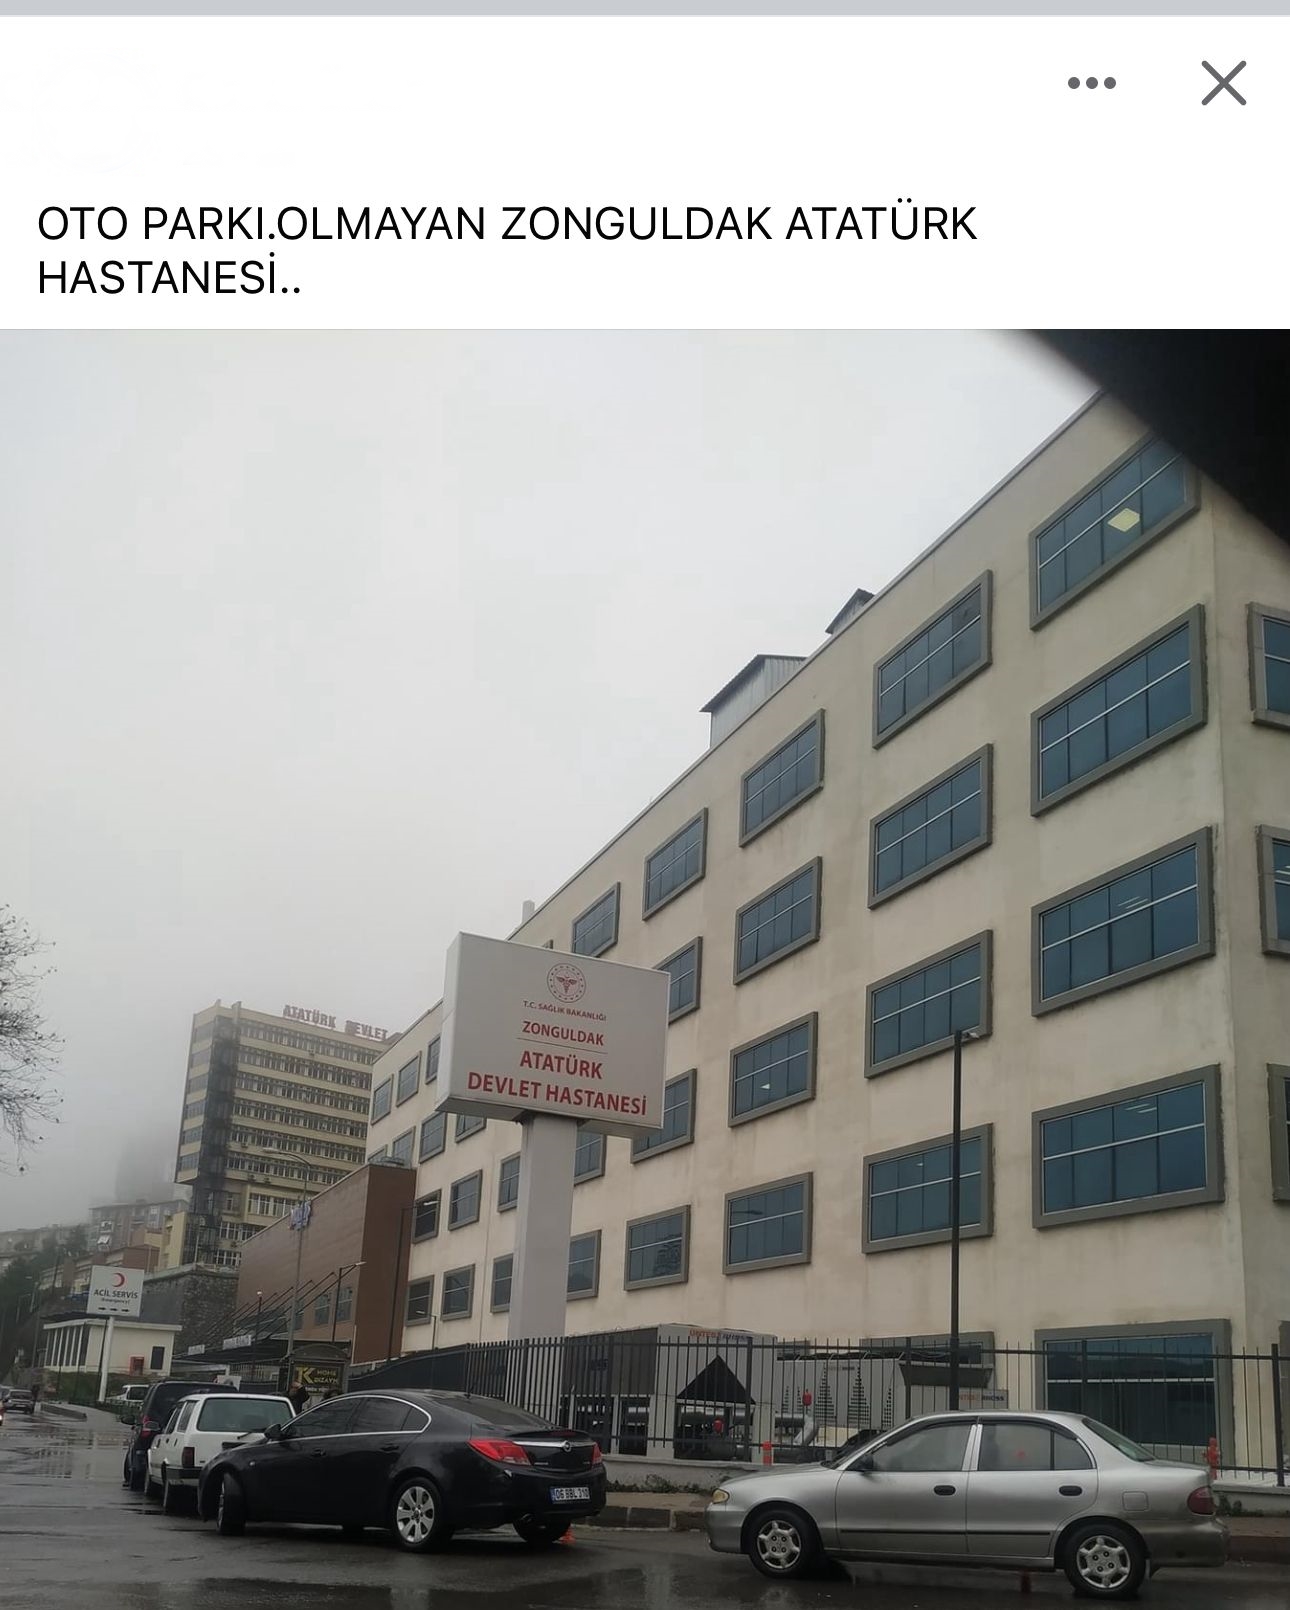 Zonguldak Atatürk Devlet Hastanesi̇